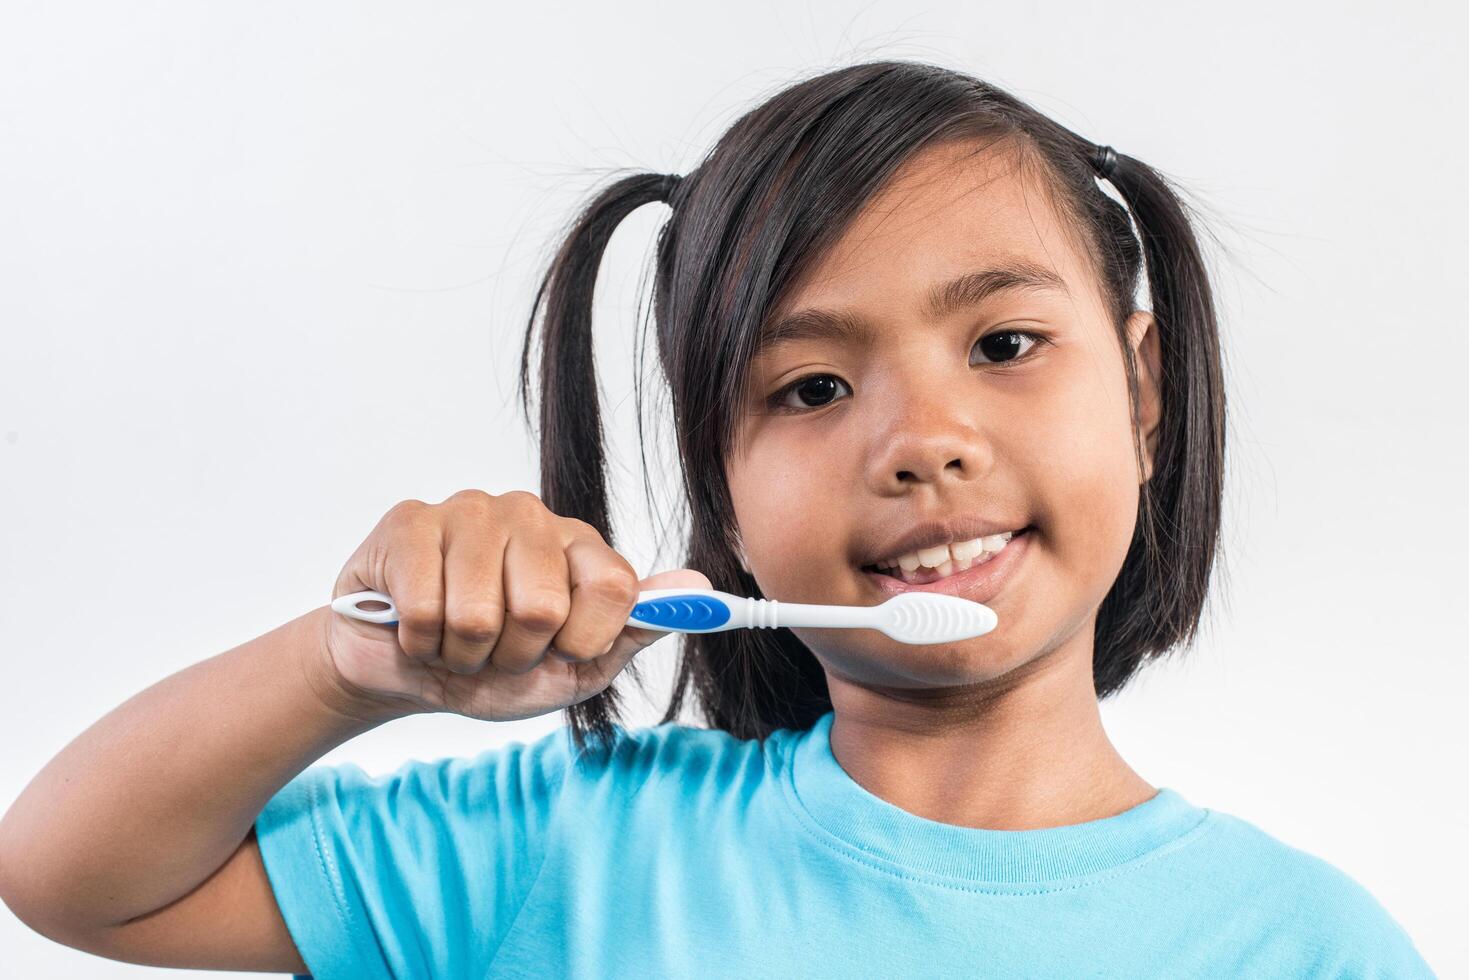 Little girl brushing her teeth in studio shot photo